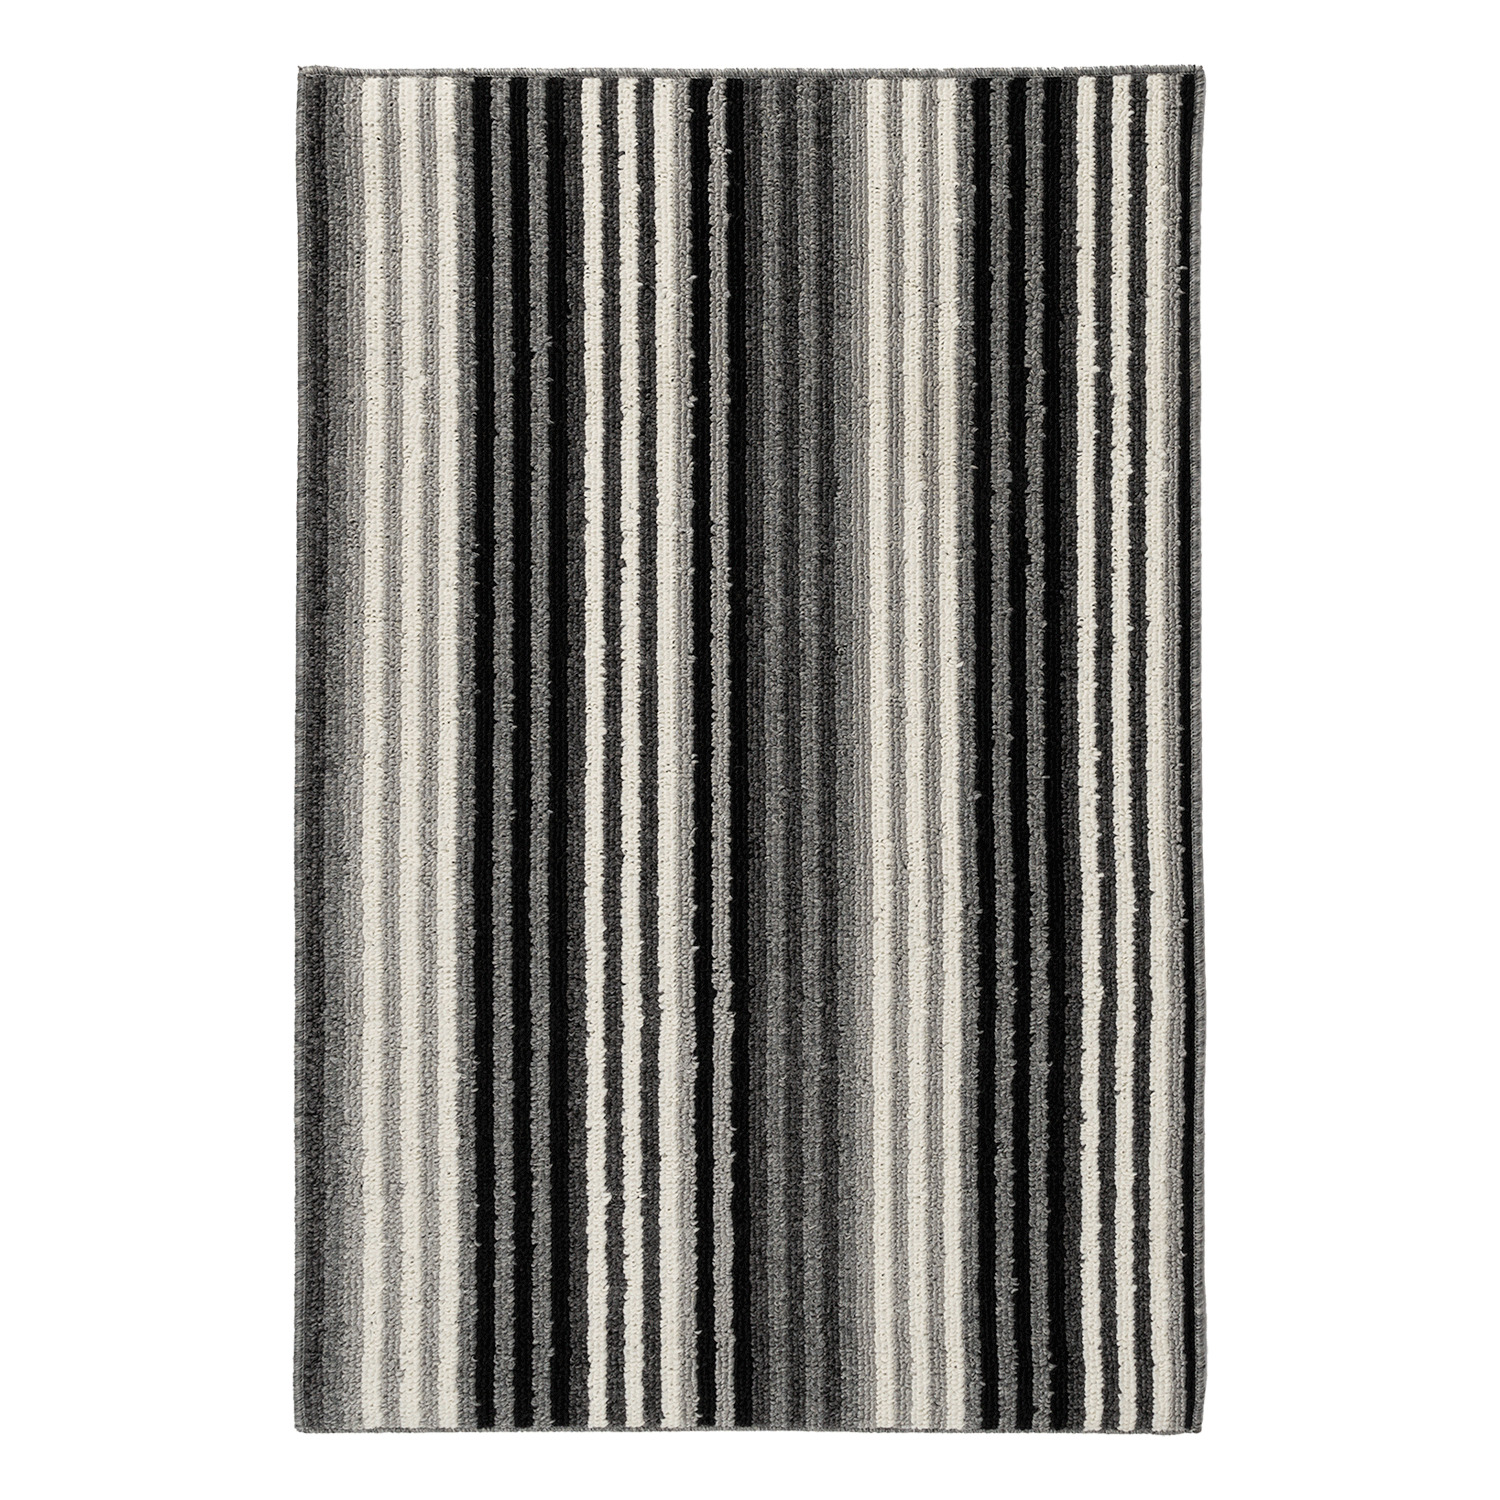 NEWPORT Collection - Blackbird rug, 2'x3'